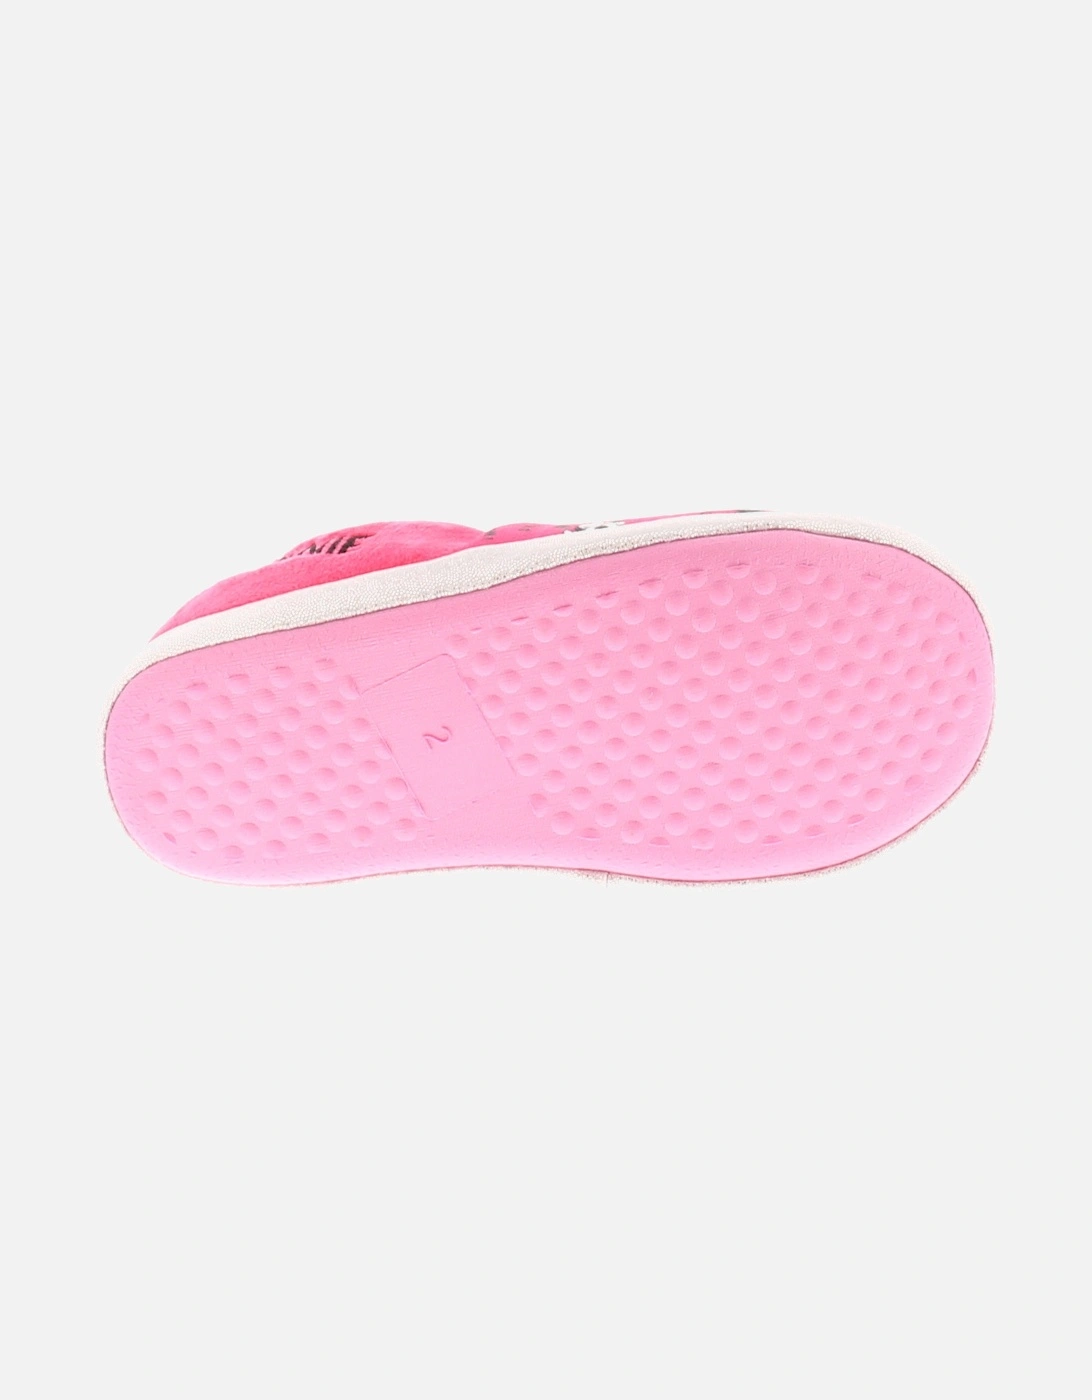 Girls Slippers Slip On Full Slippers Fun Bow Pink UK Size